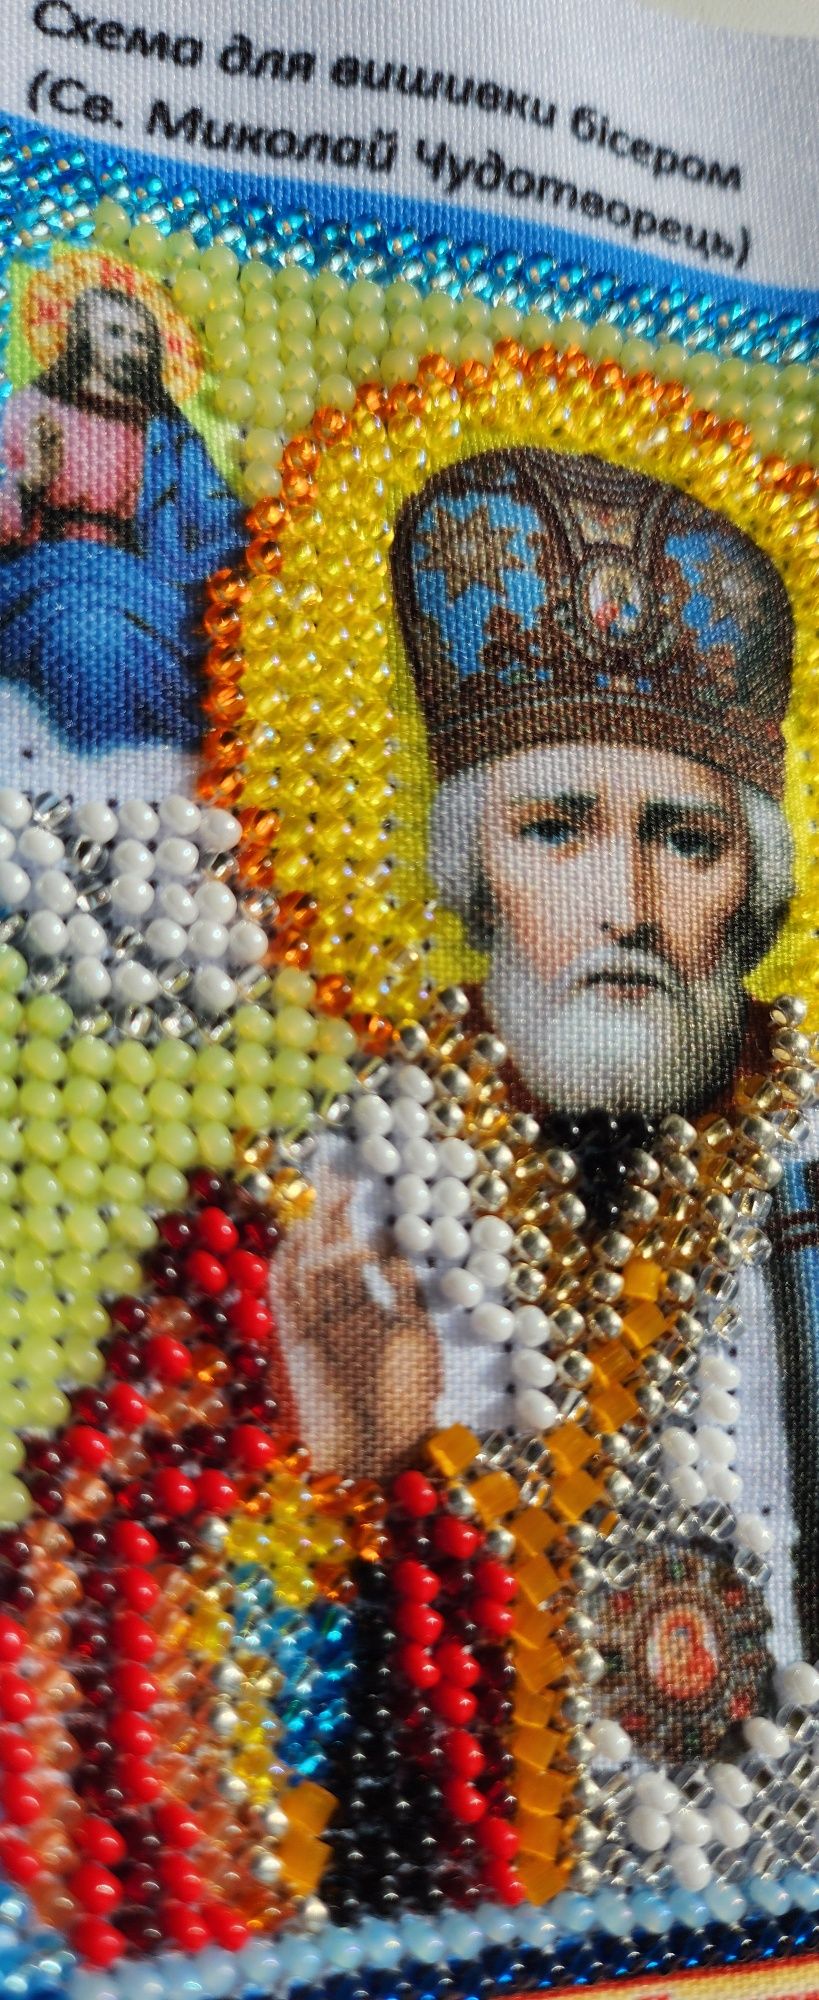 Вышивка бисером икона "Св.Николай Чудотворец".